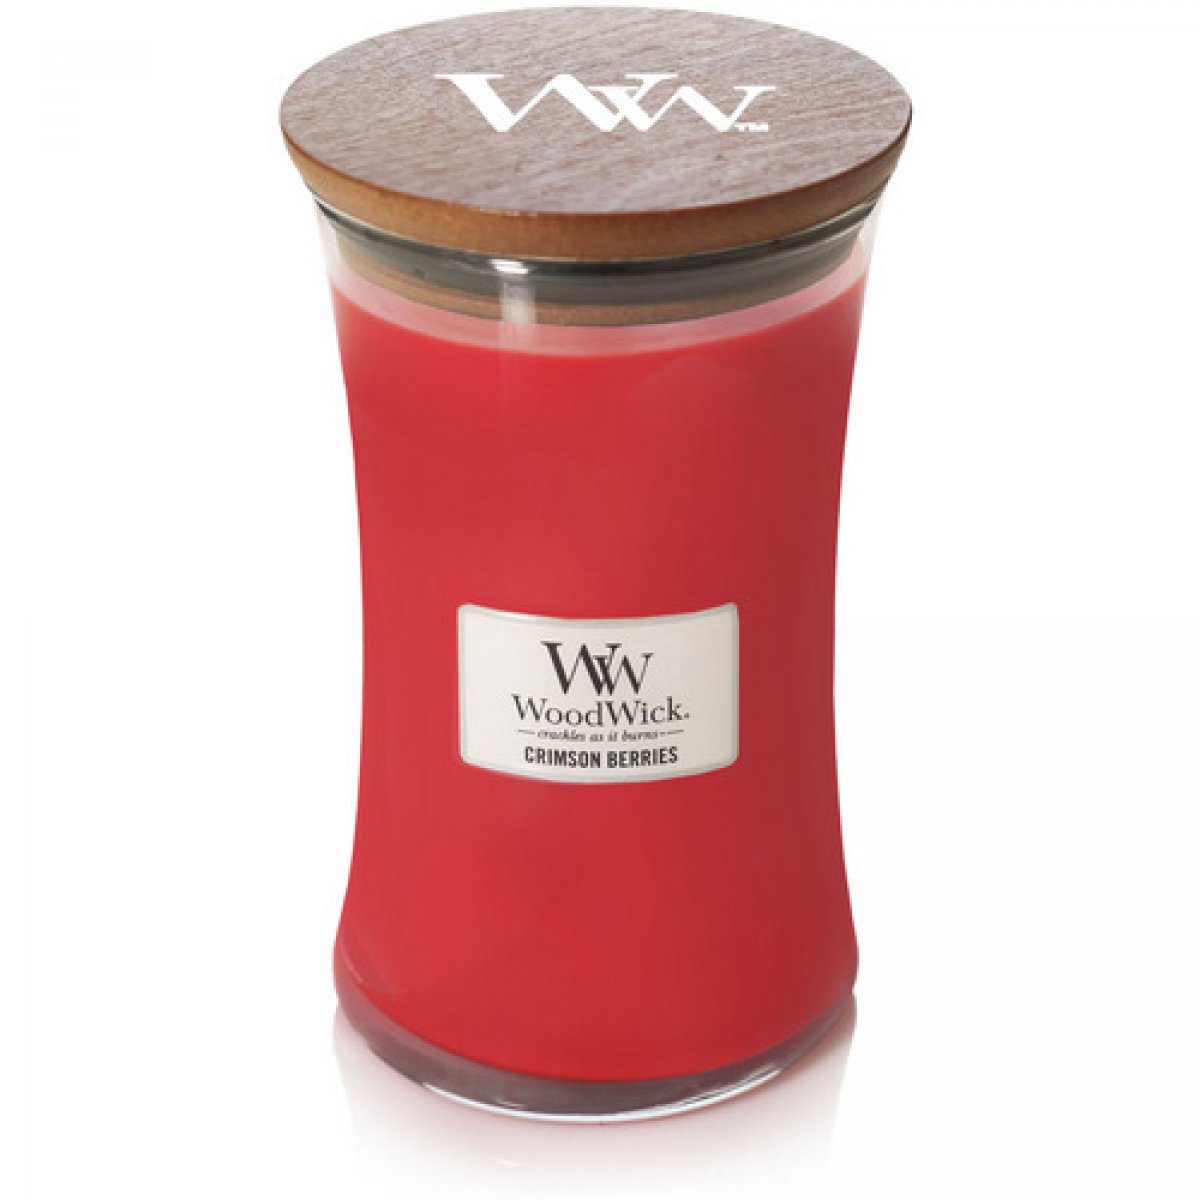 Candela a clessidra grande Crimson Berries Woodwick - 1134 g 